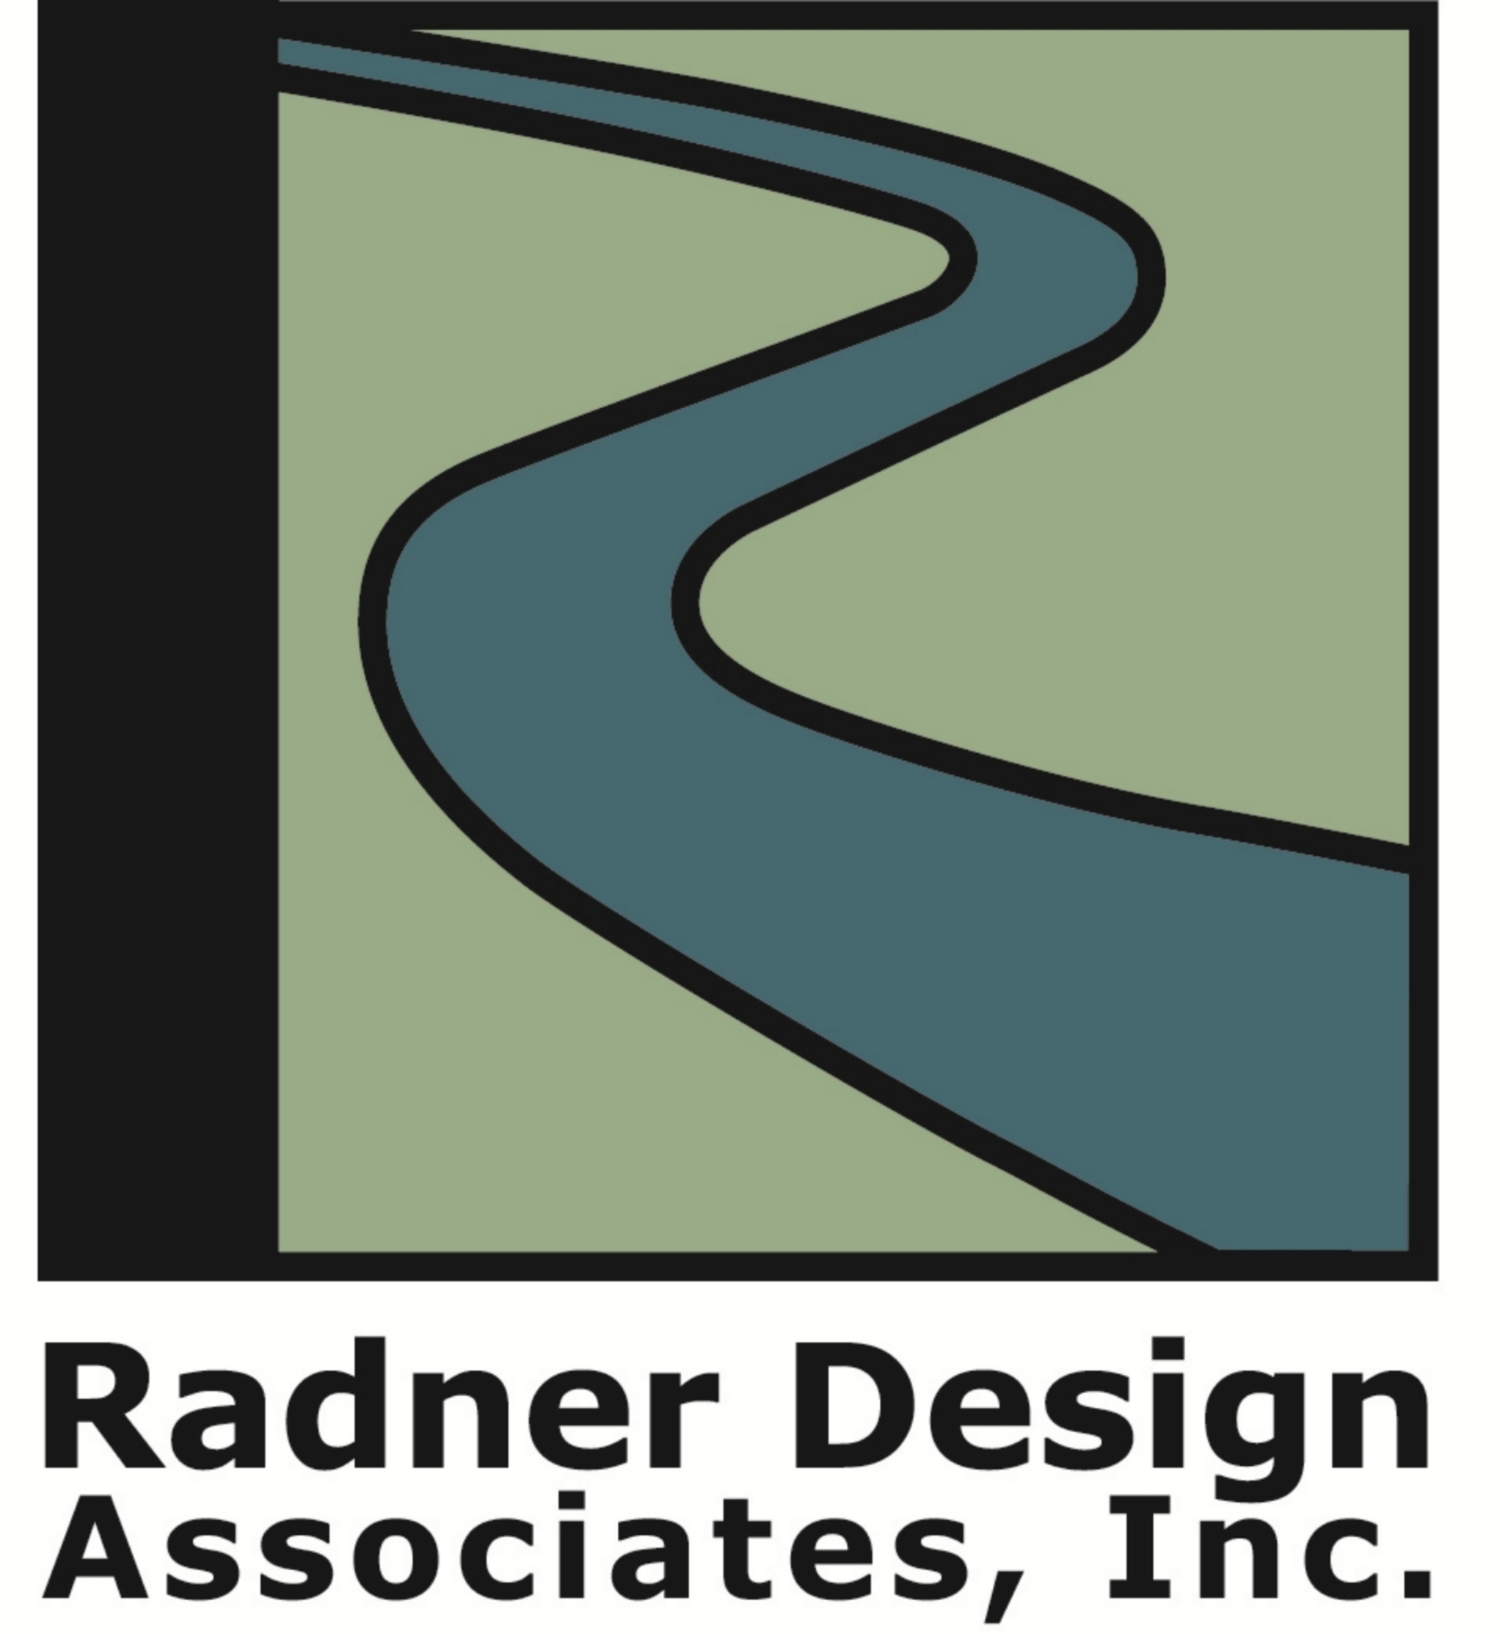 Radner Design Associates. Inc.